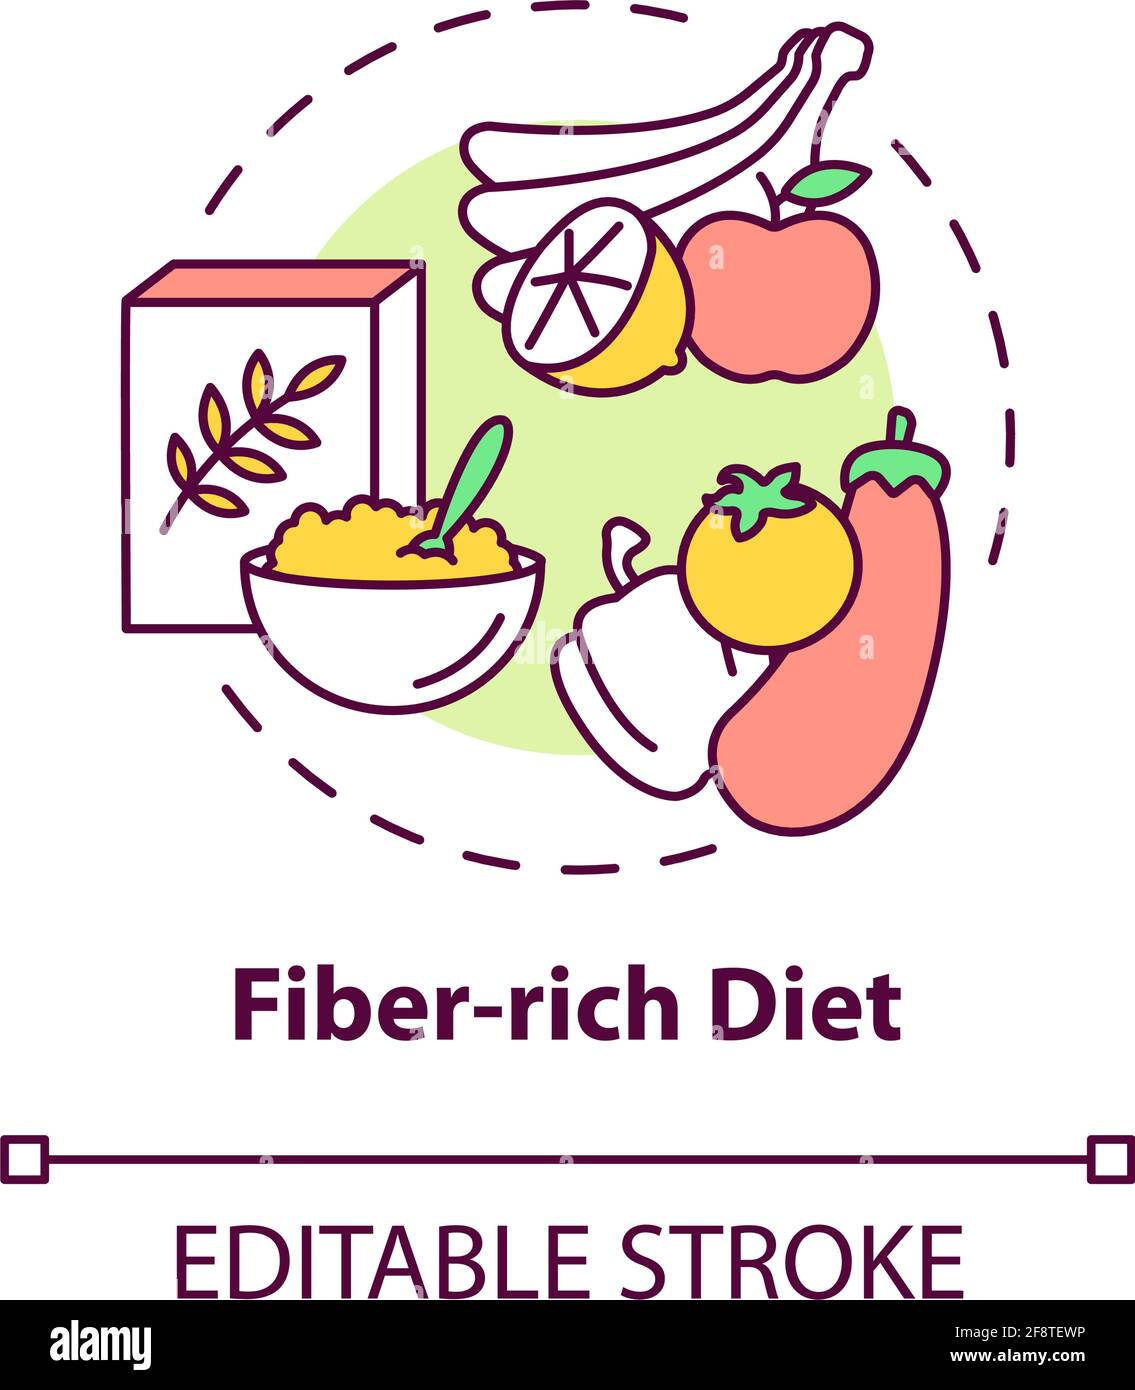 Fiber-rich diet concept icon Stock Vector Image & Art - Alamy